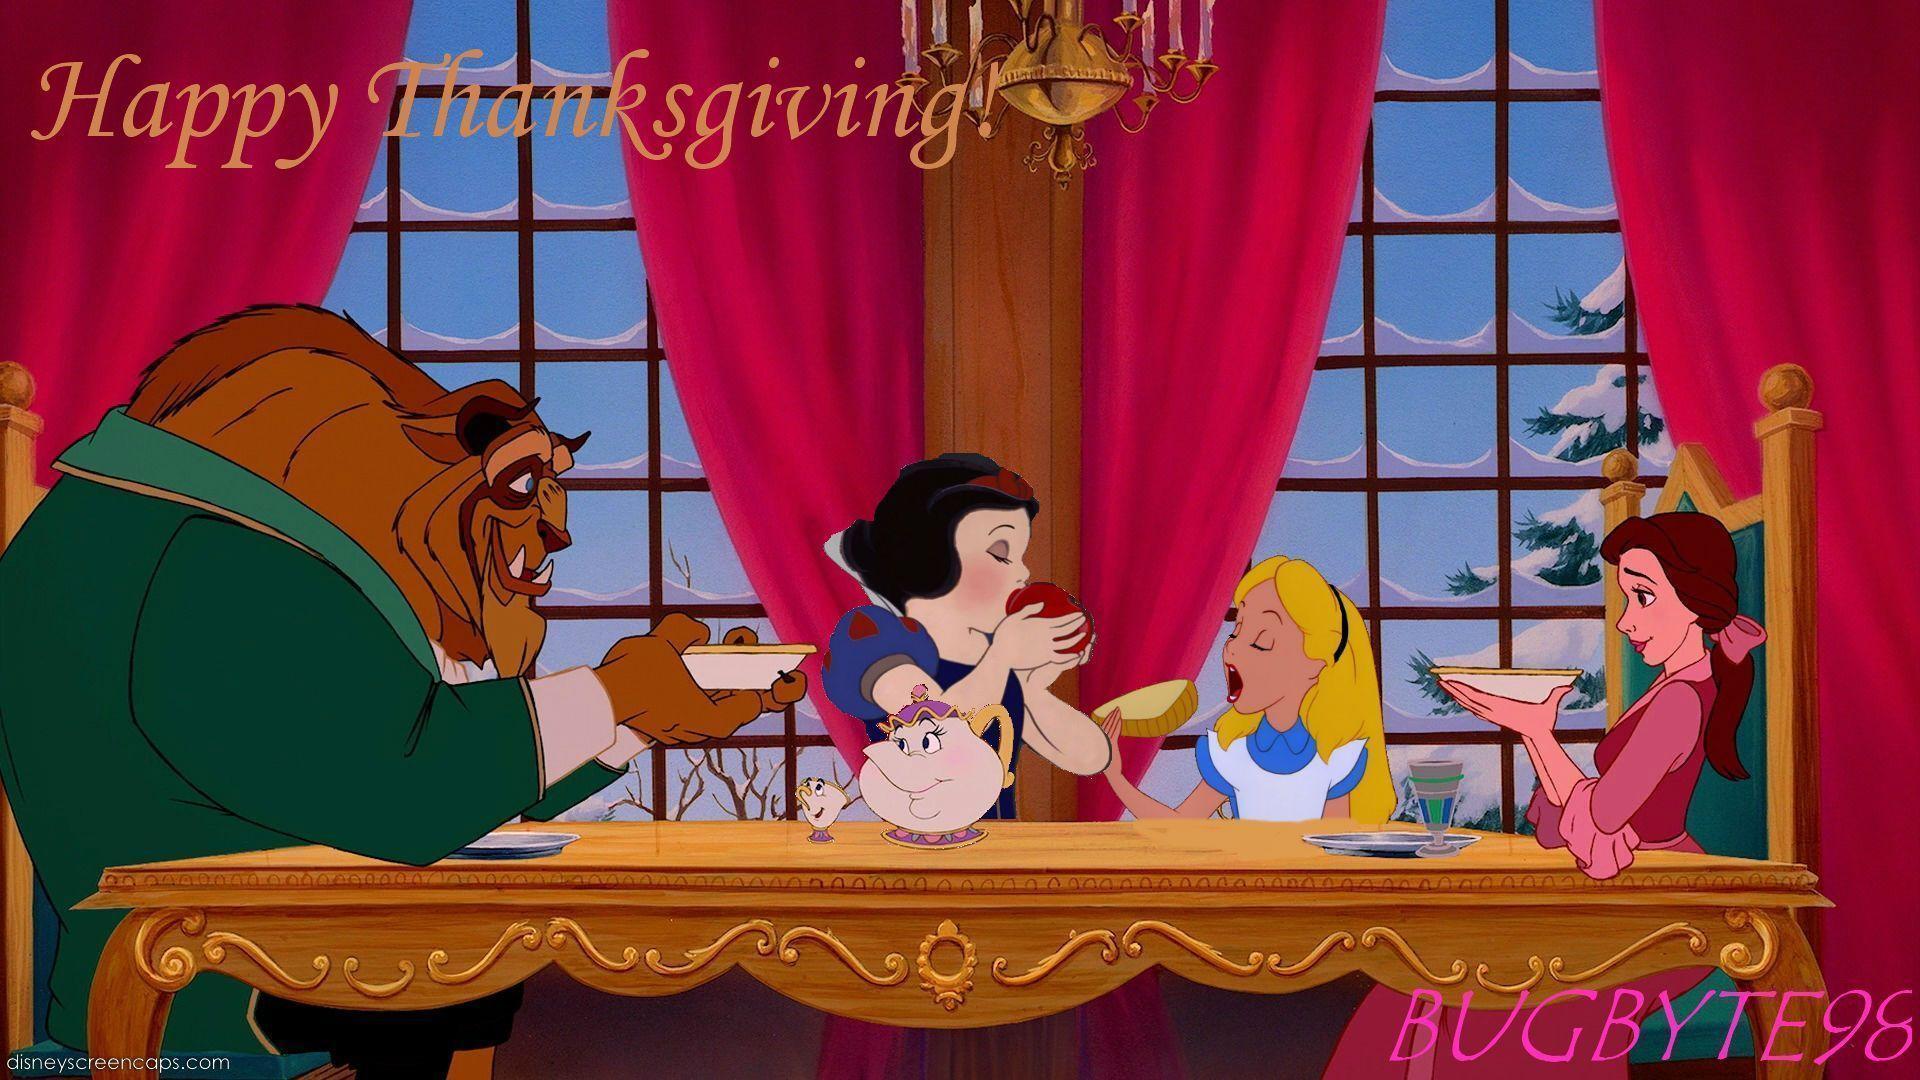 Wallpaper For > Disney Princess Thanksgiving Wallpaper